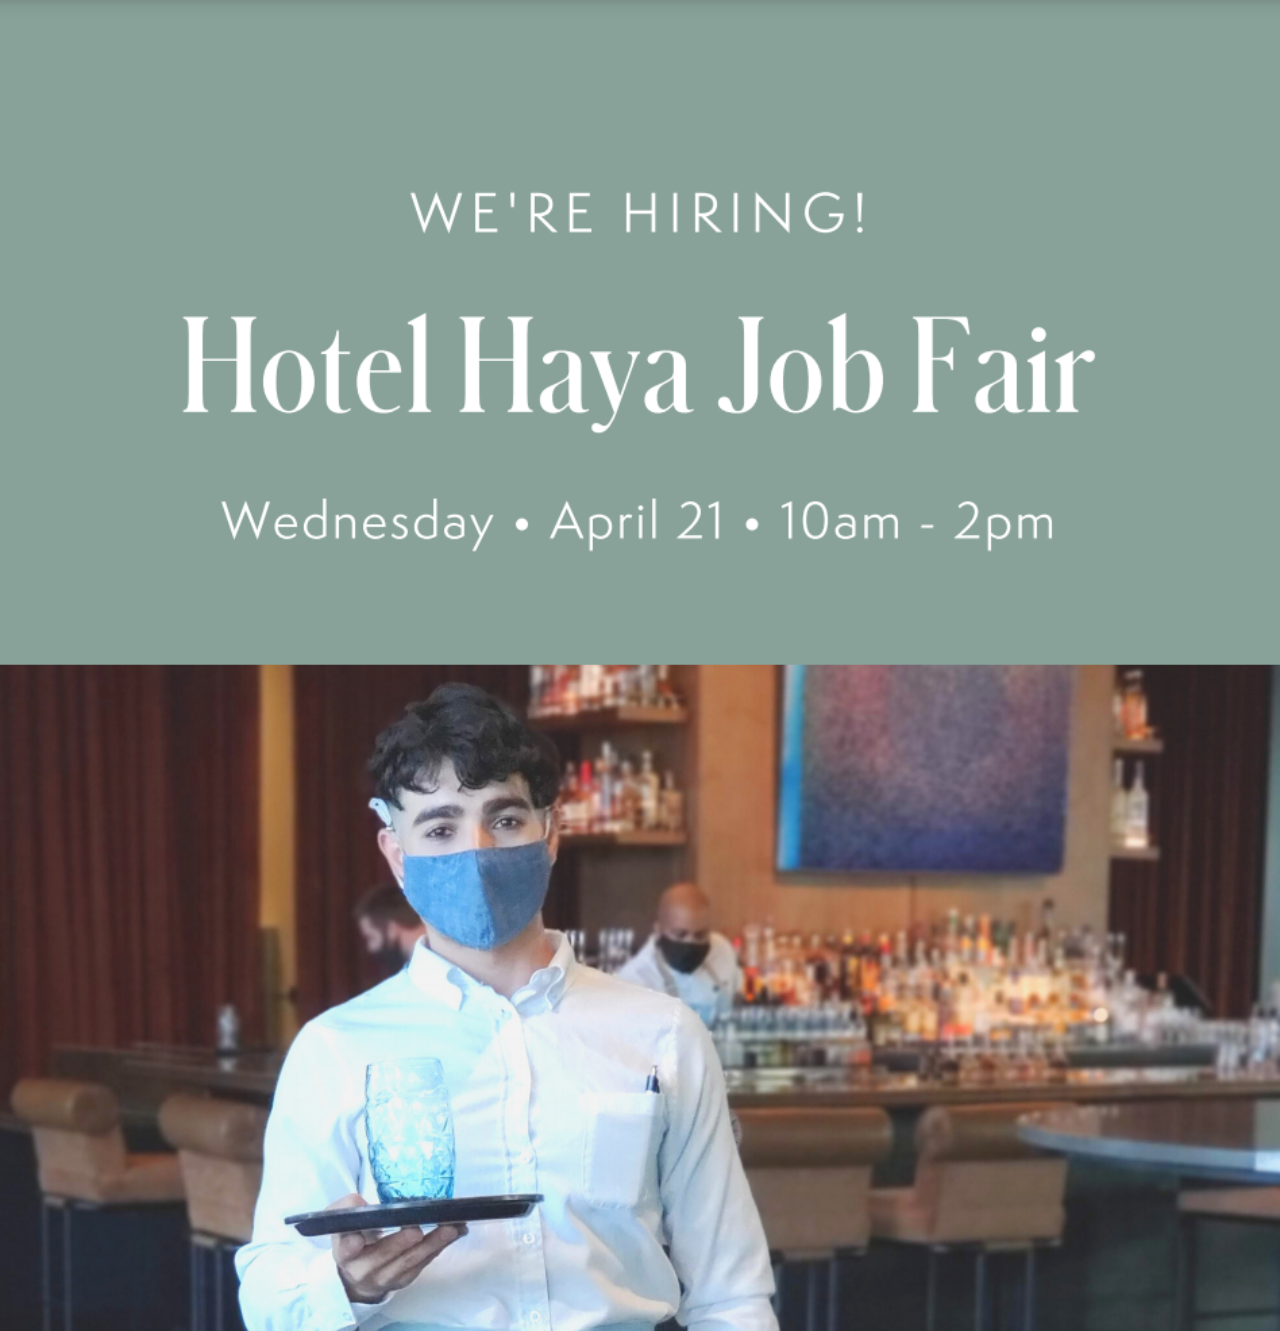 Hotel Haya Job Fair banner featuring waiter holding a glass with bar tender behind him.